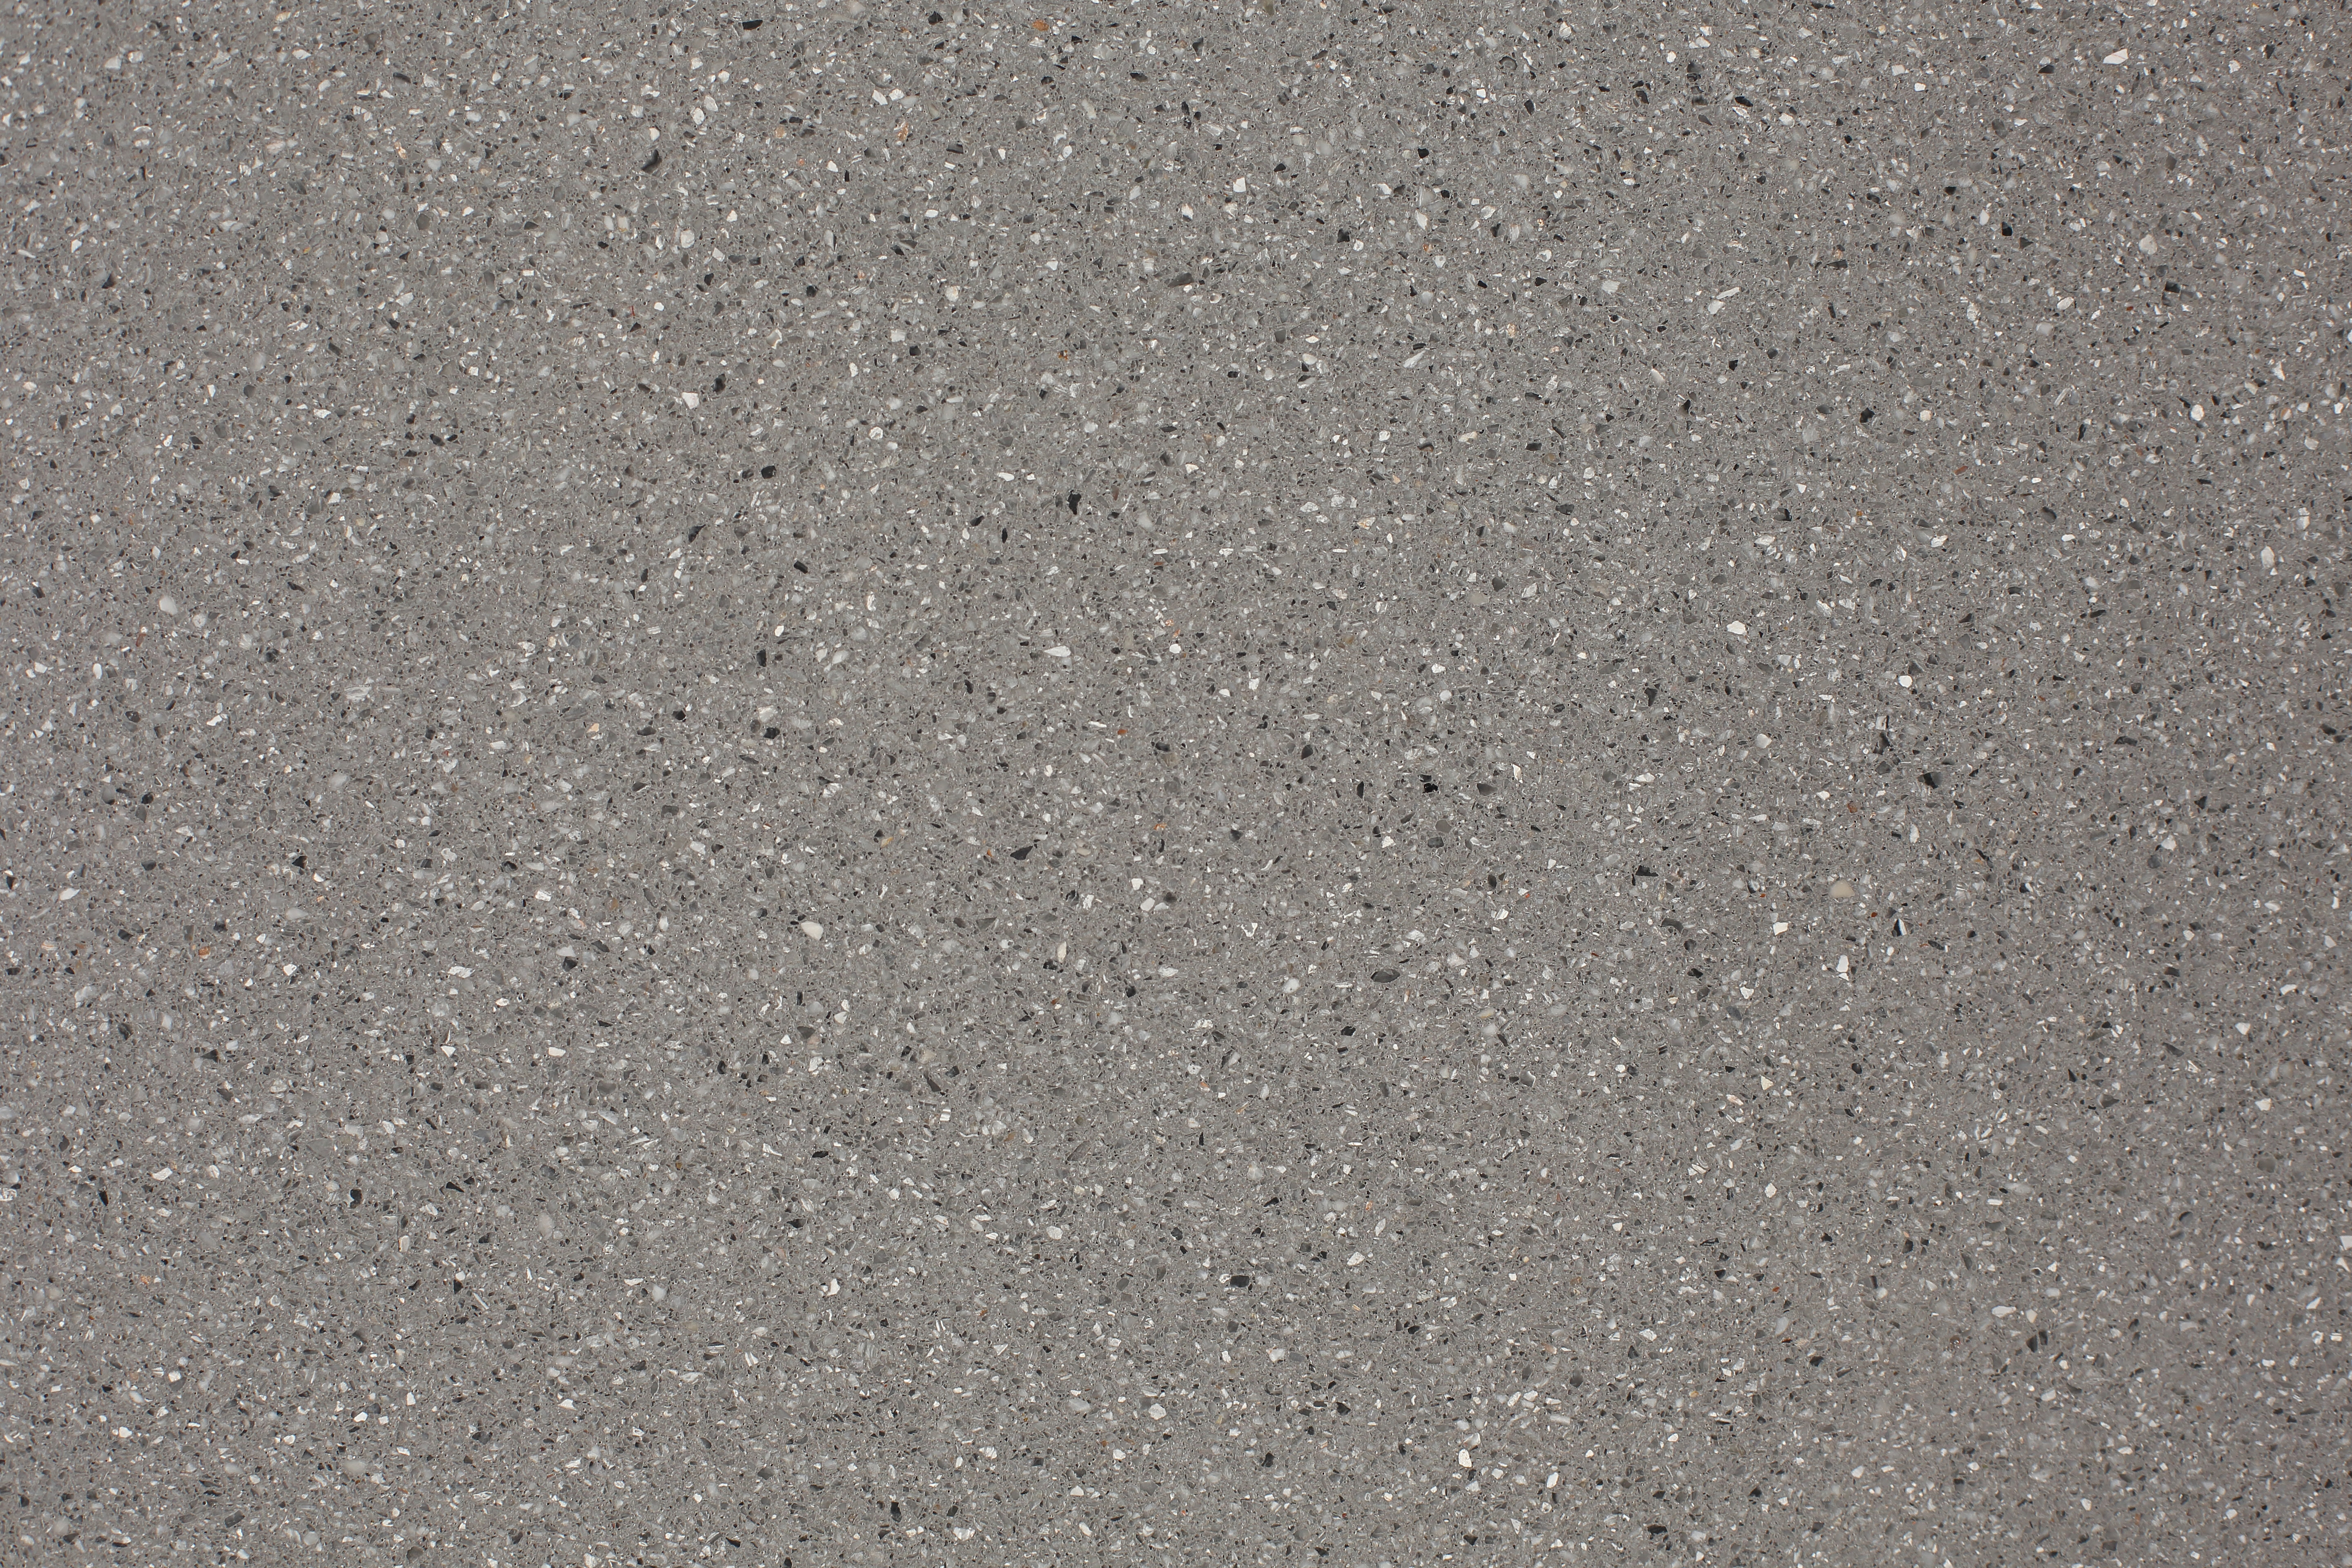 Cement Slab Black Terrazzo Table Top